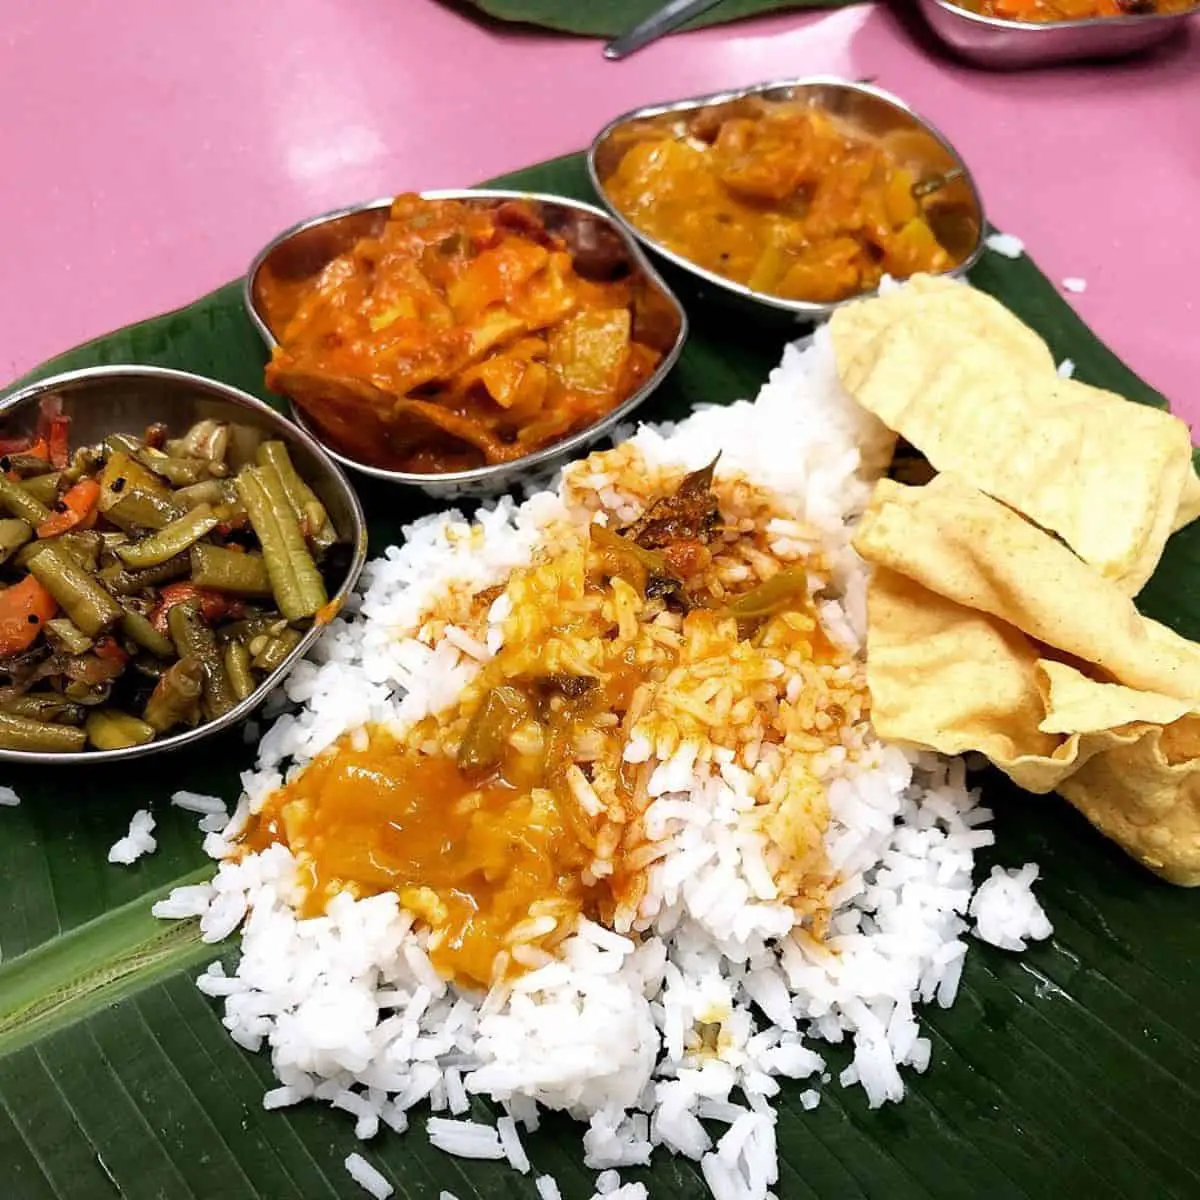 Delicious Indian meals in banana leaf at Veloo Villas Restaurant Penang